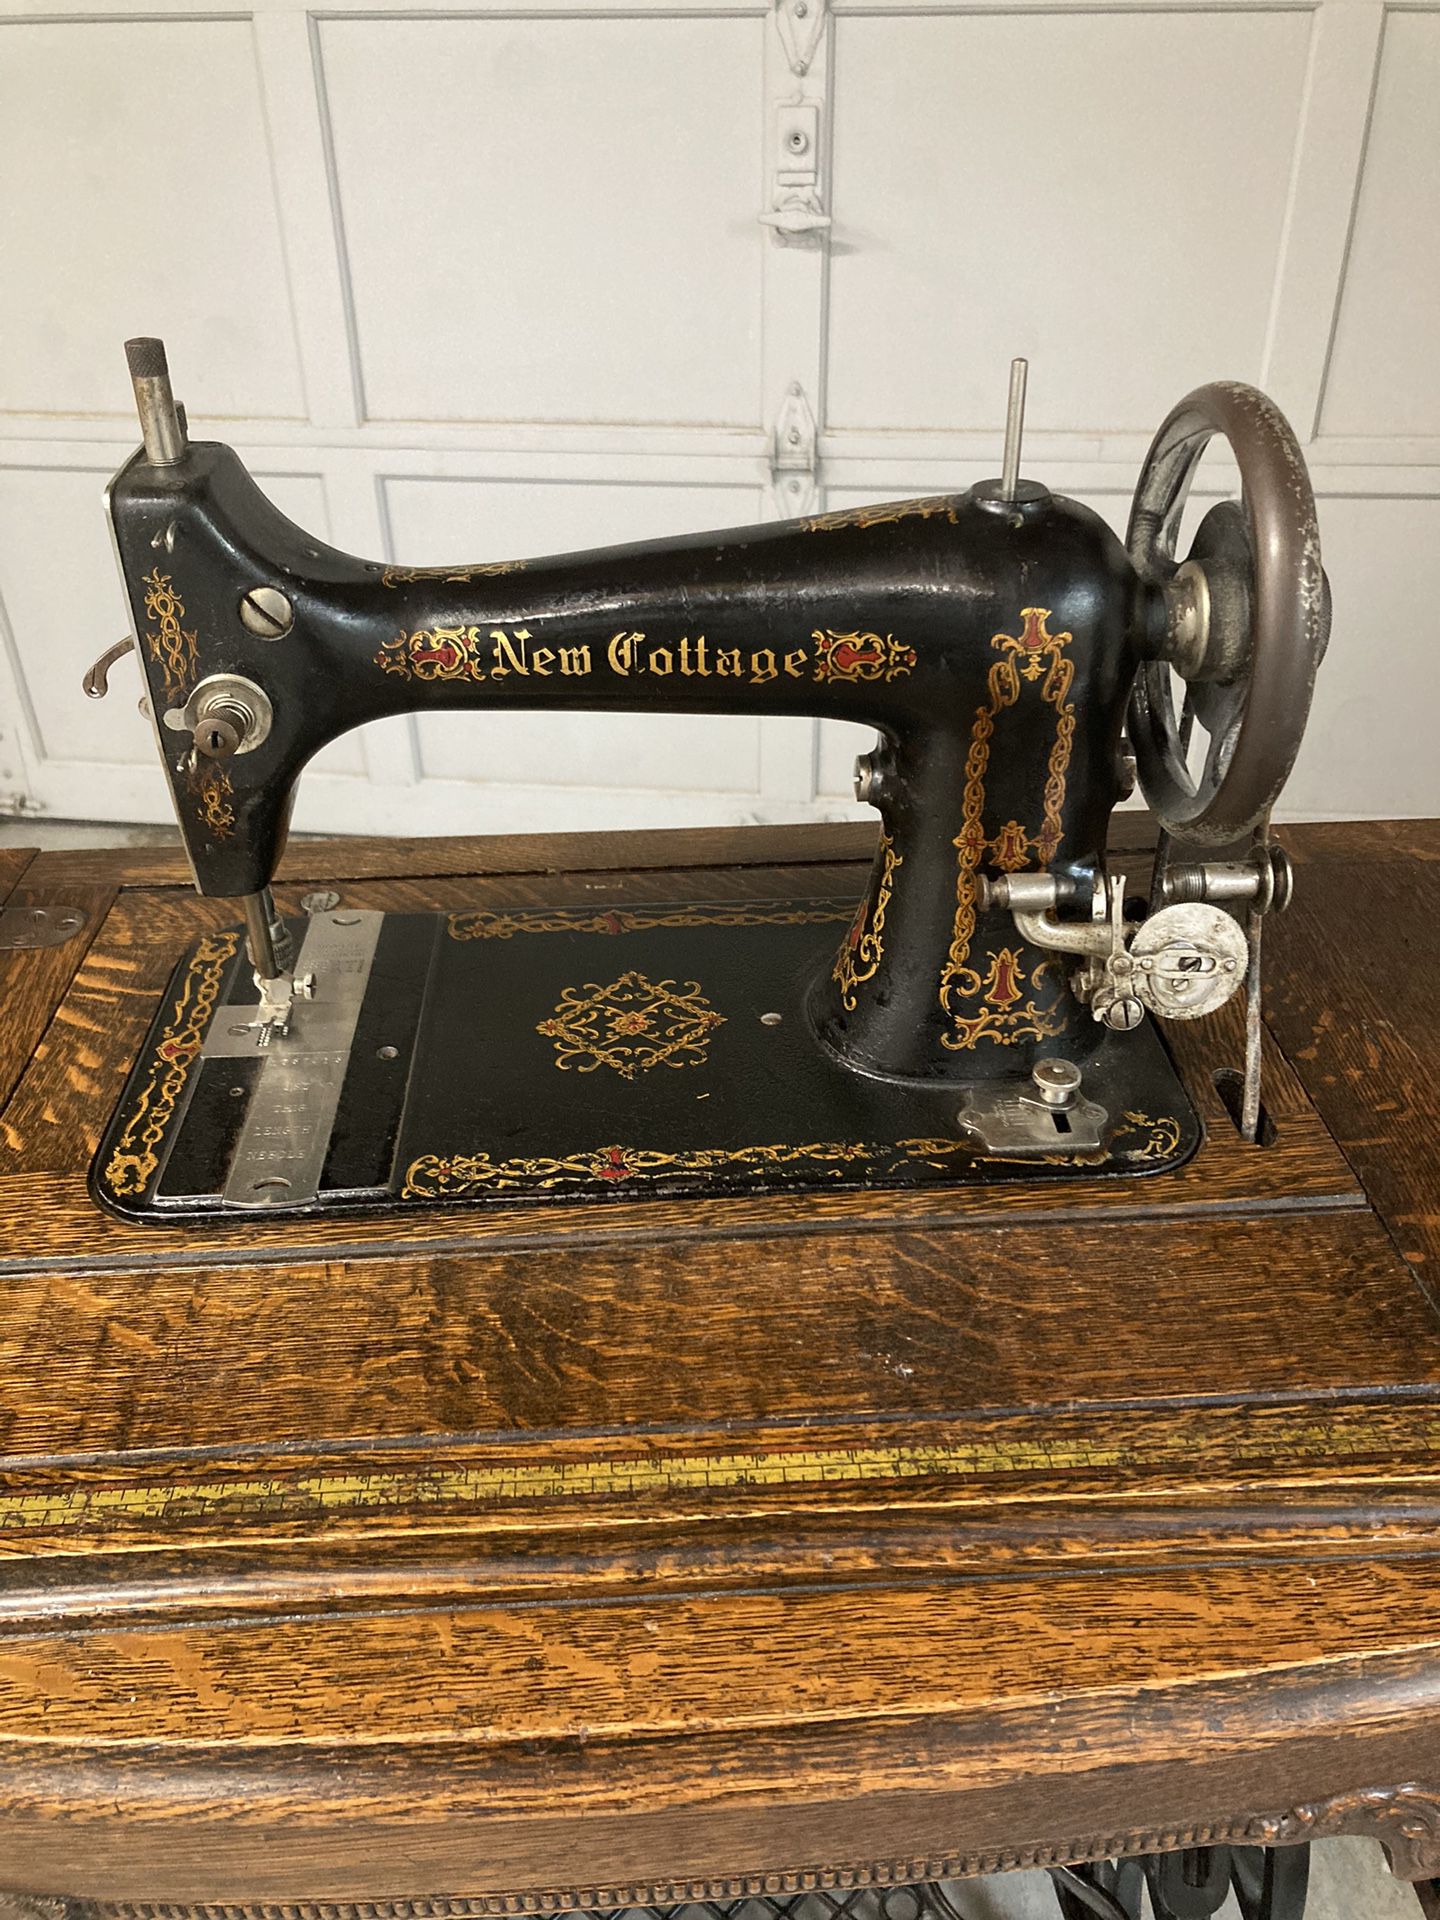 Vintage New Cottage Sewing Machine/Cabinet